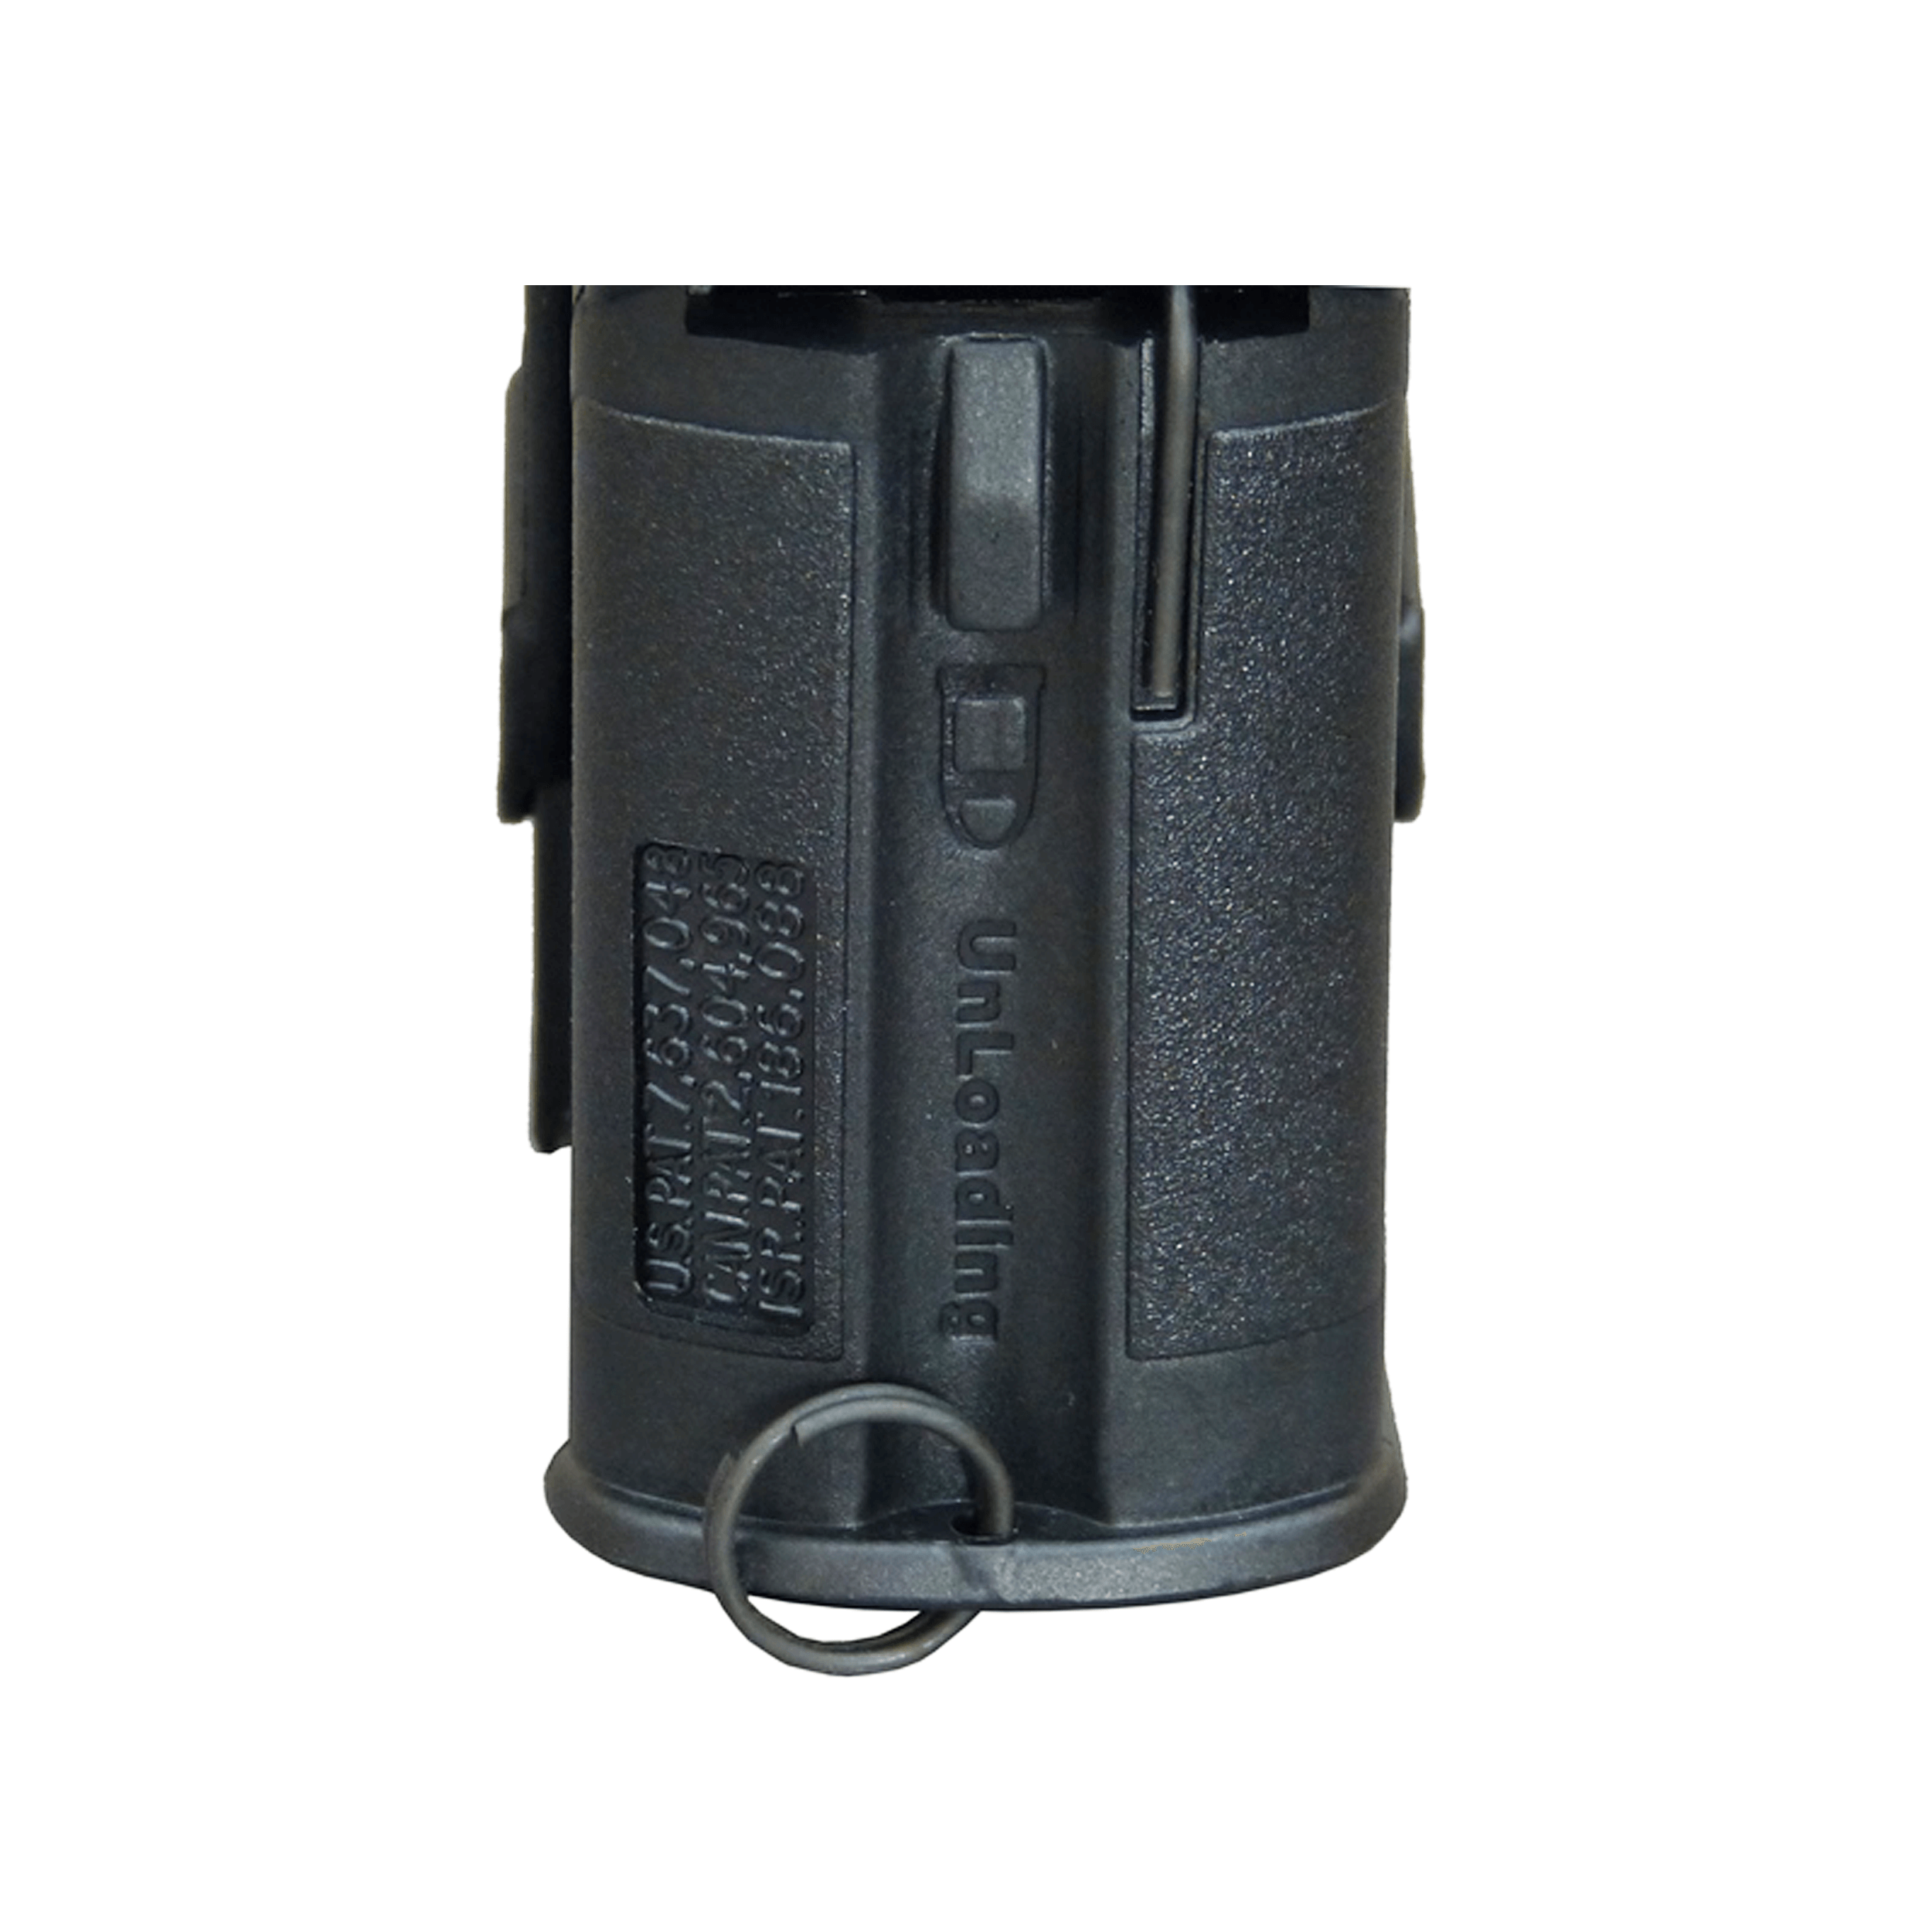 maglula® UpLULA®  9 mm to .45ACP universal pistol magazine loader - Black UP60B